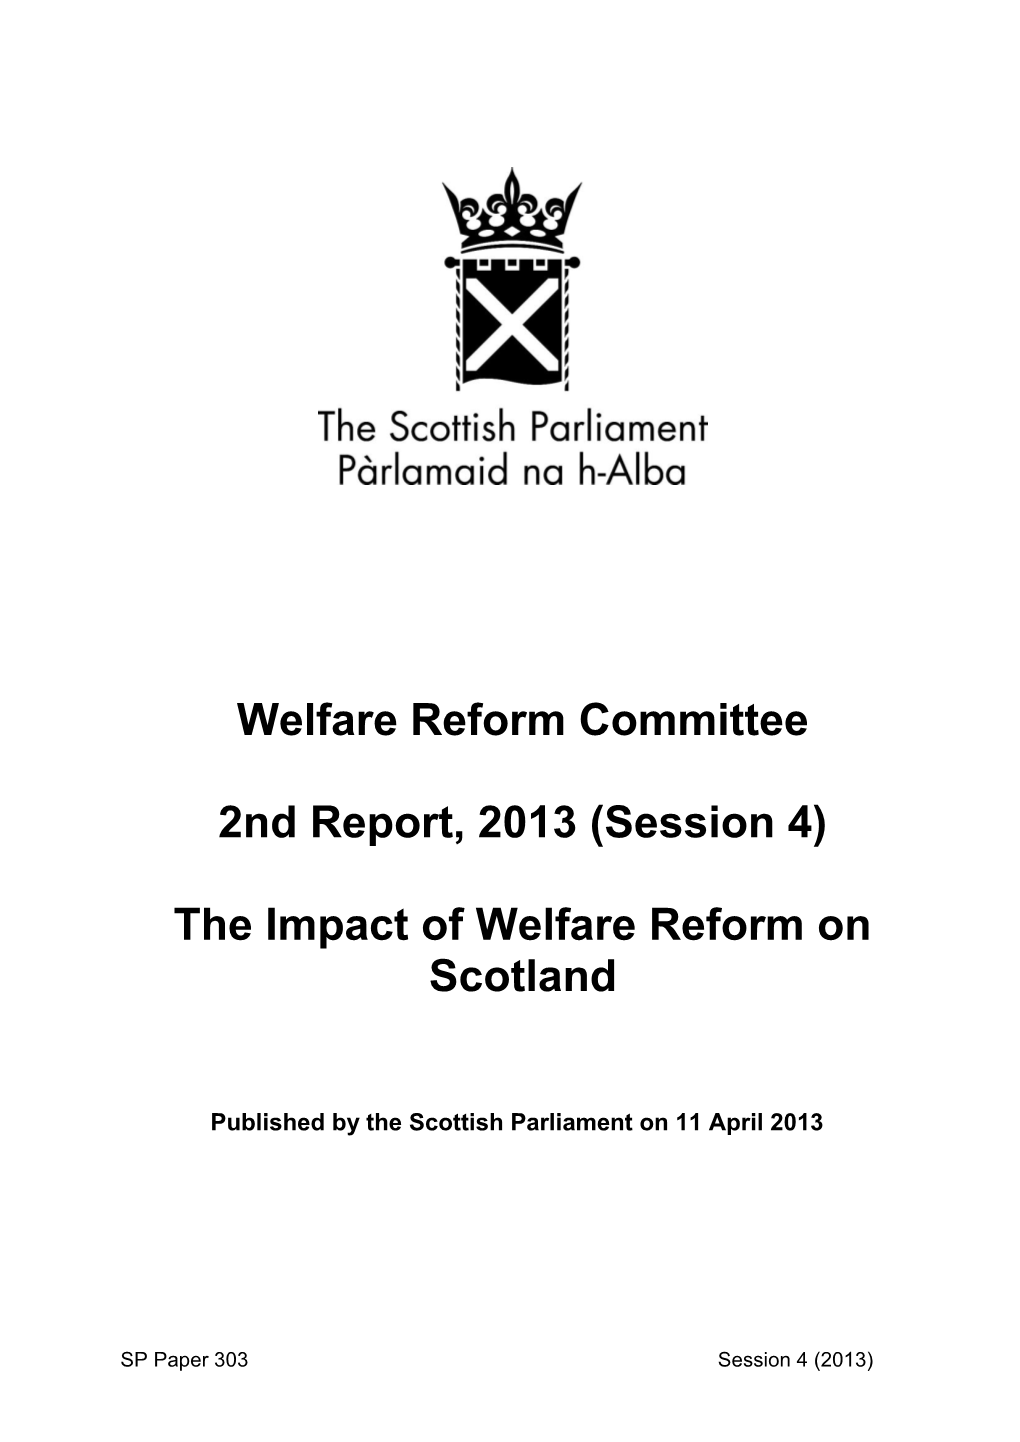 The Impact of Welfare Reform on Scotland